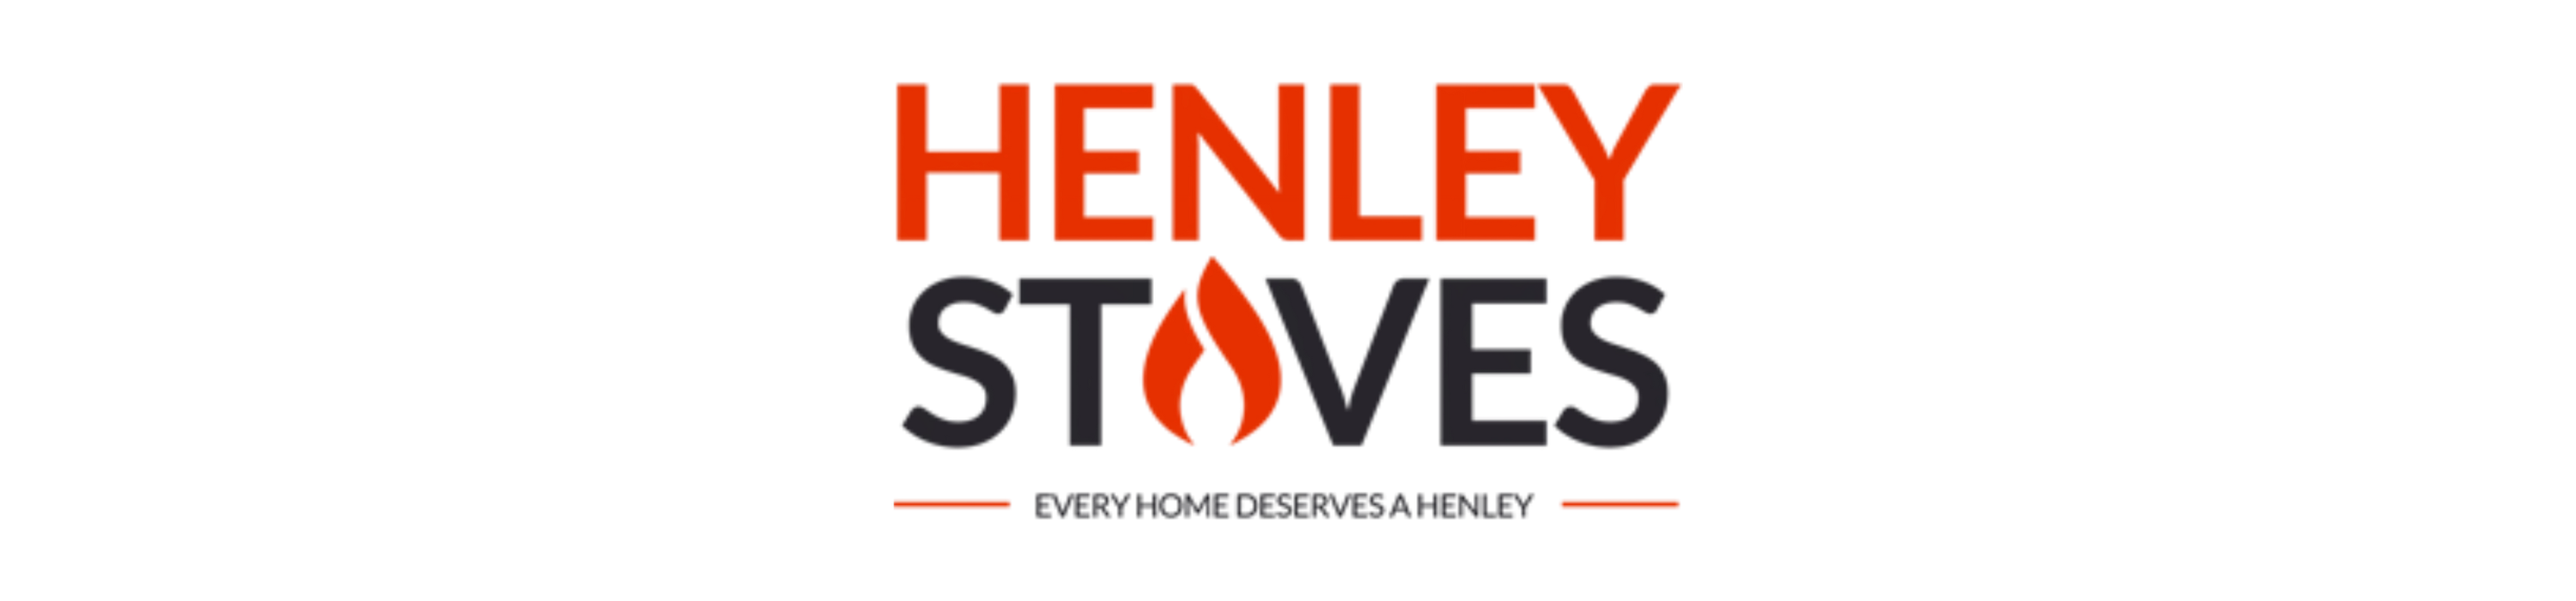 Henley Stoves